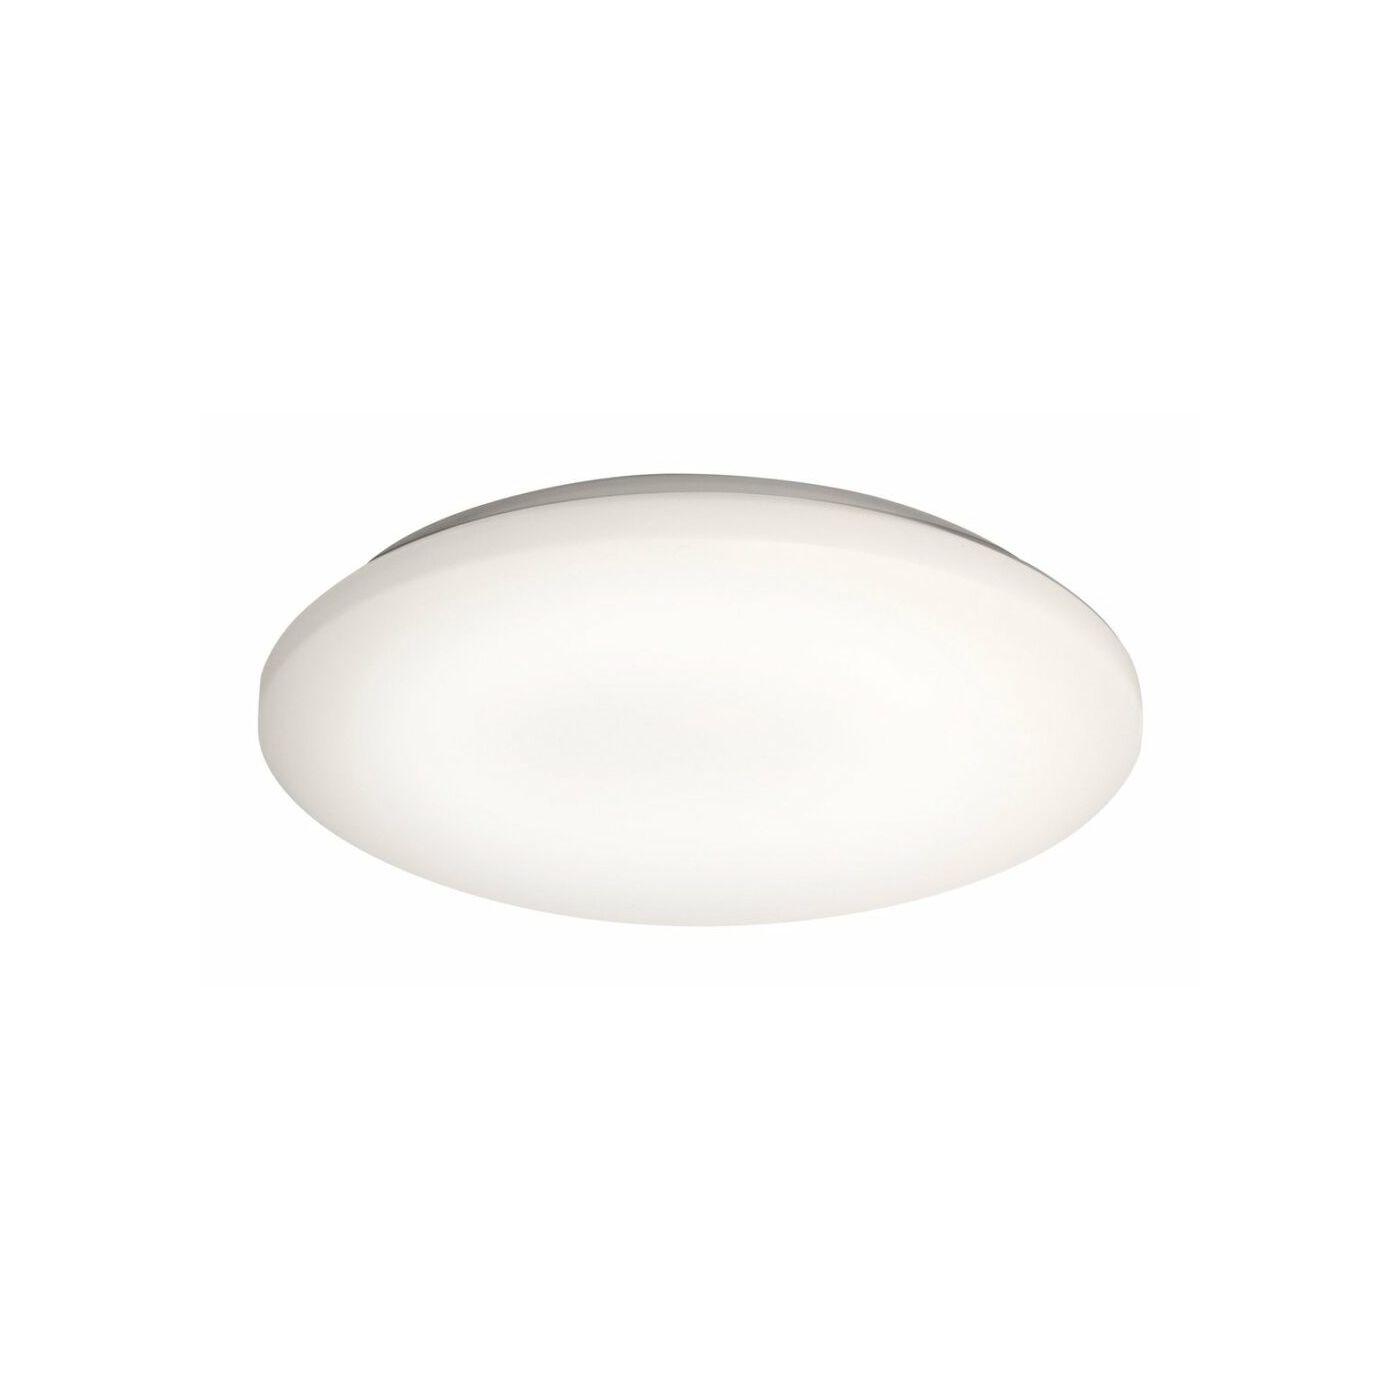 Orbis sensor LED plafondlamp 30 wit